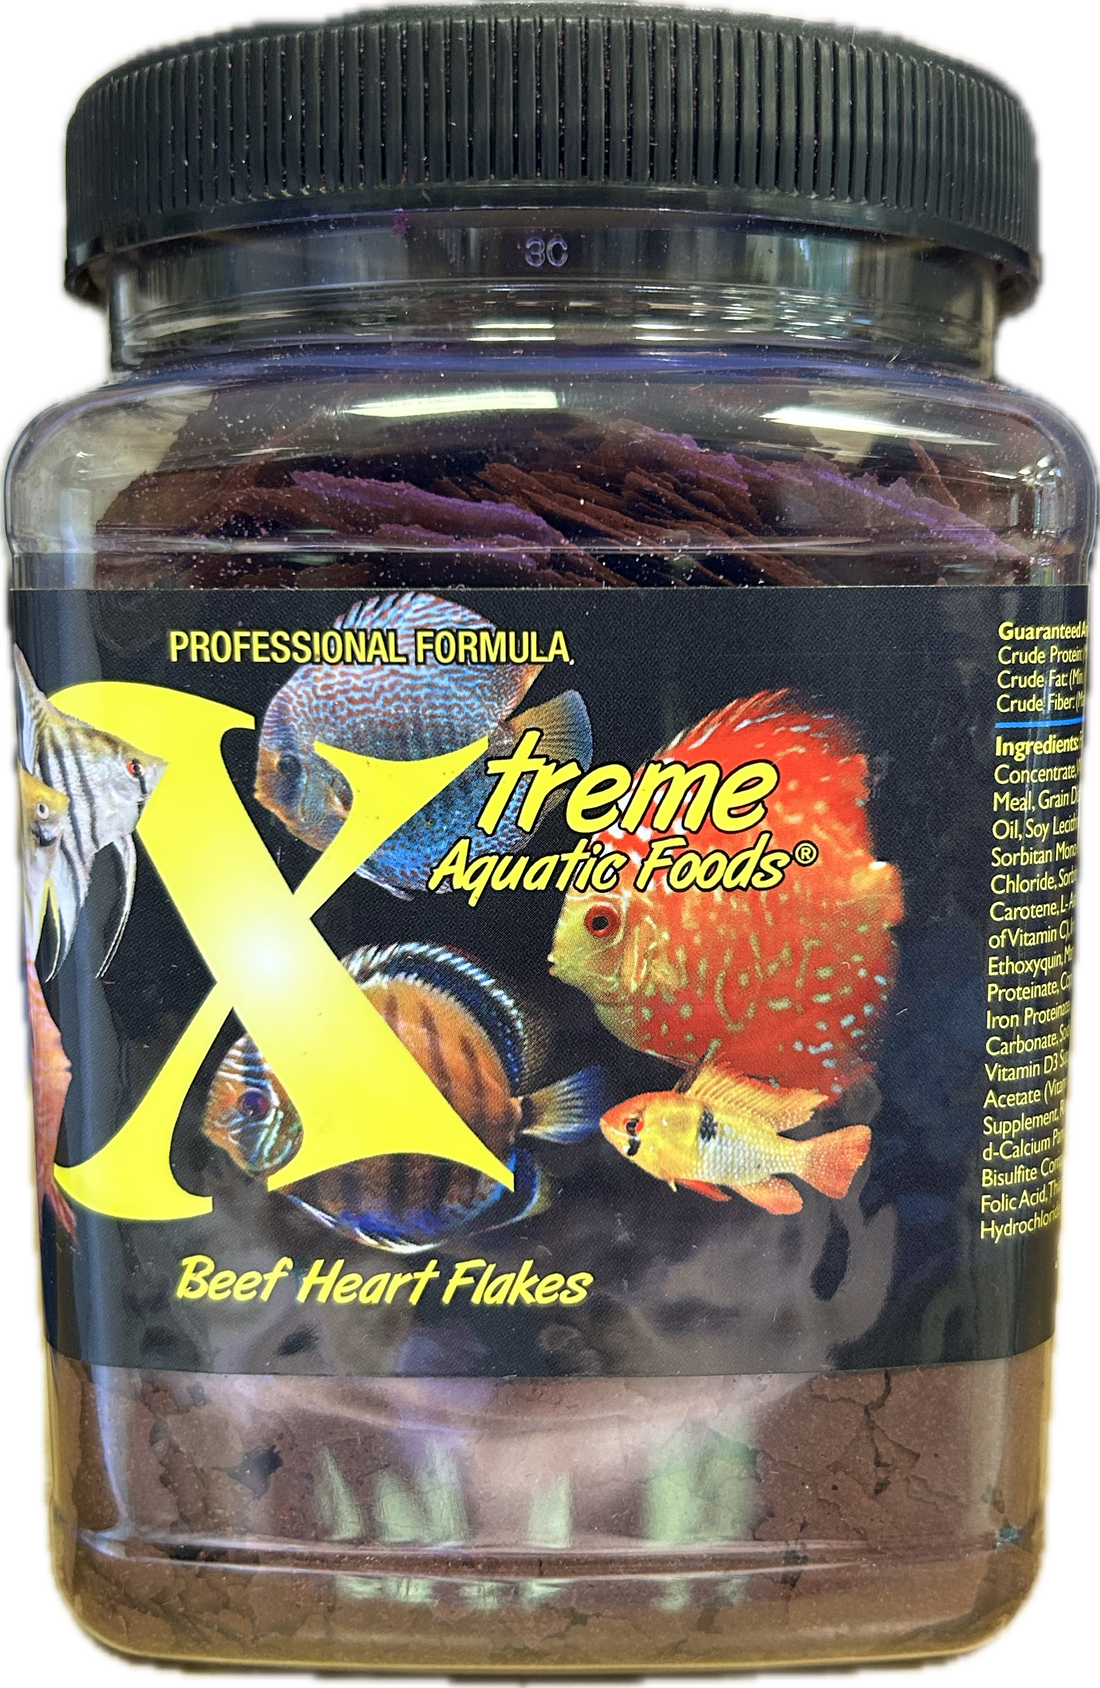 Xtreme Aquatic Foods Beef Heart Flakes